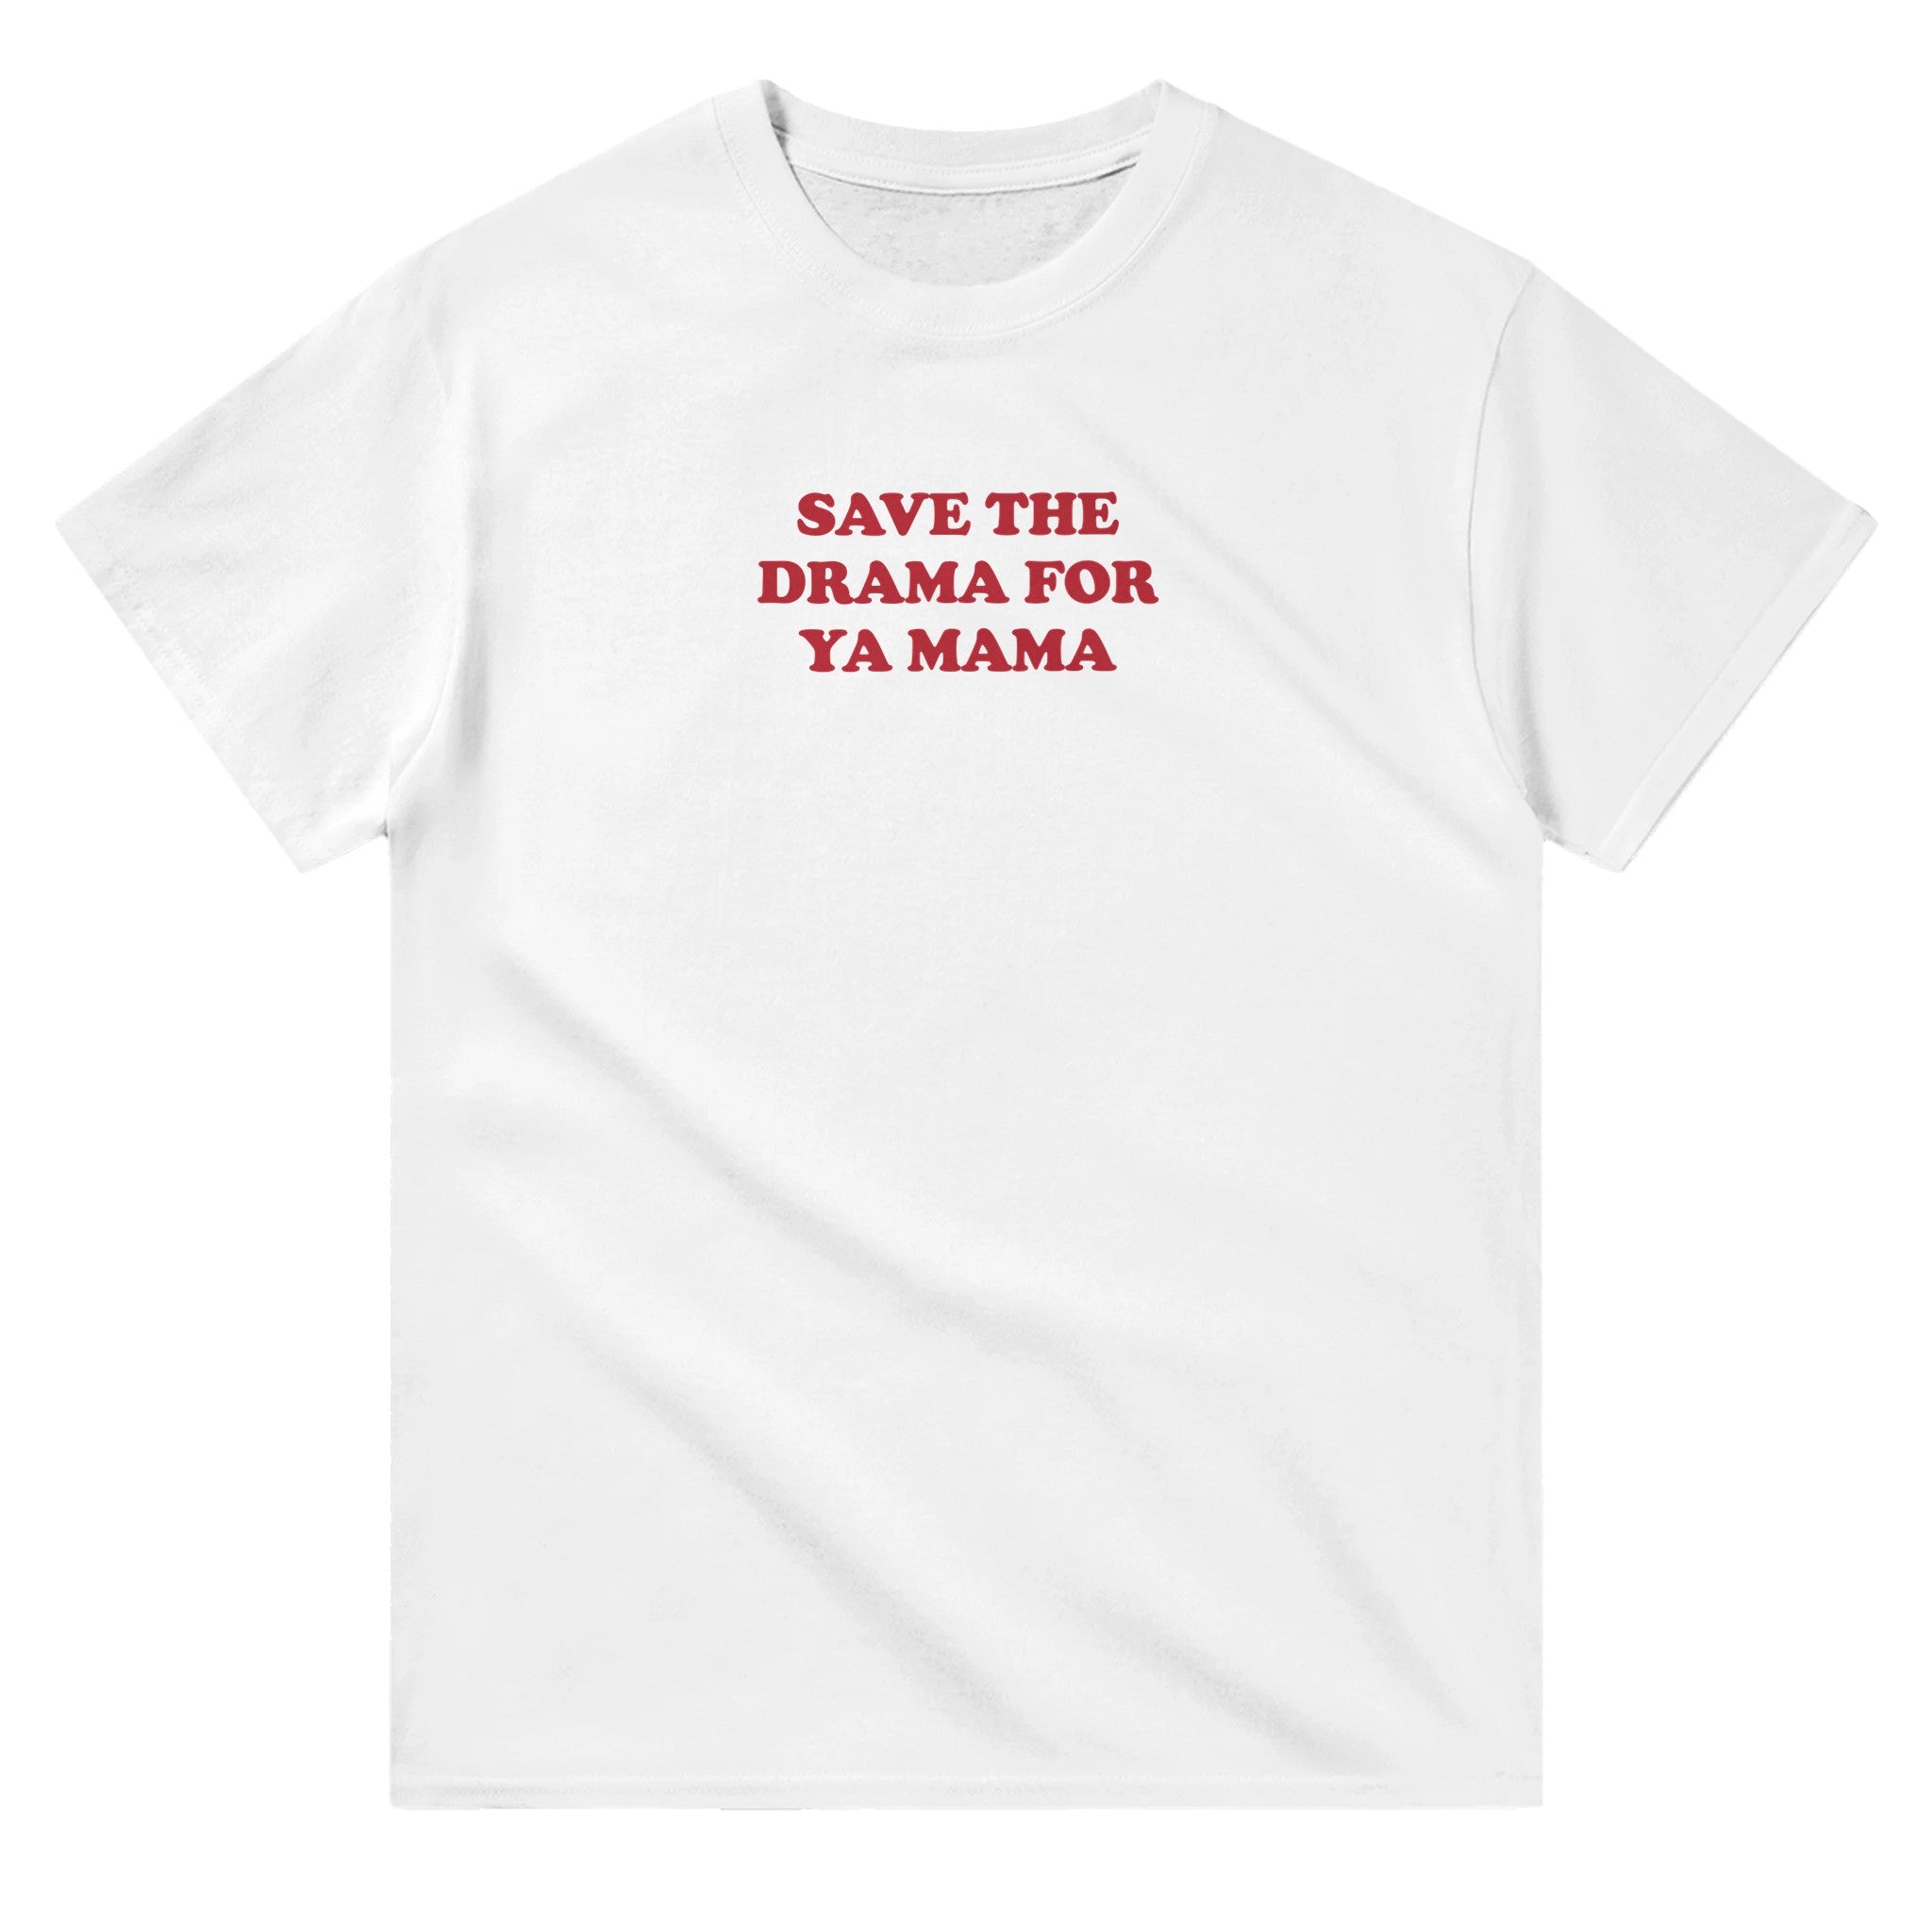 'Save the Drama for ya Mama' classic tee - In Print We Trust